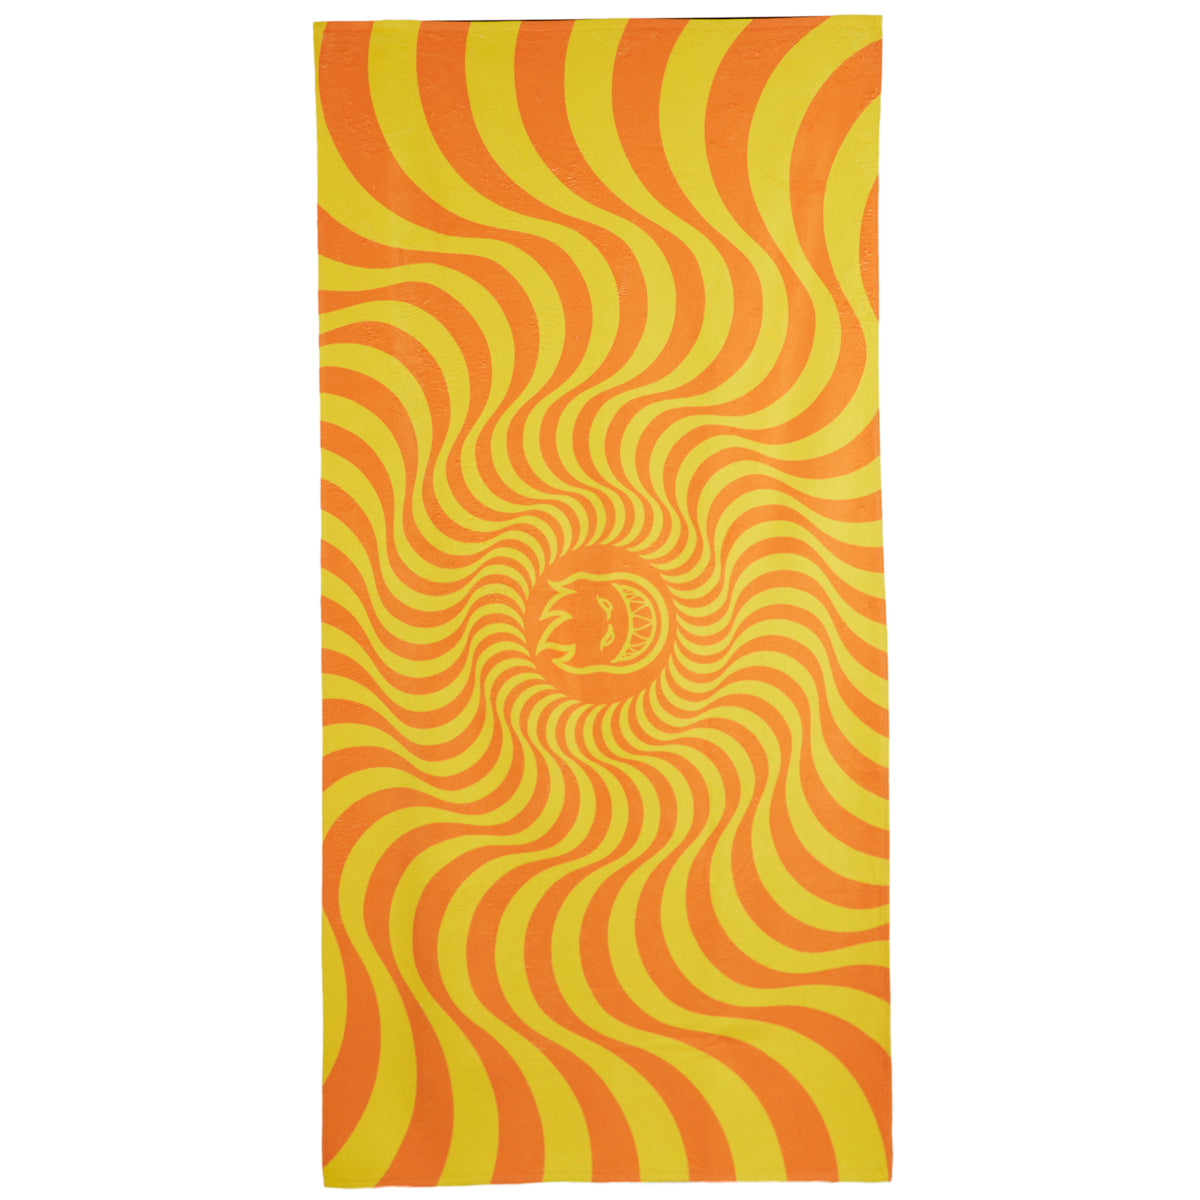 Spitfire Bighead Towel - Orange/Yellow Swirl image 1